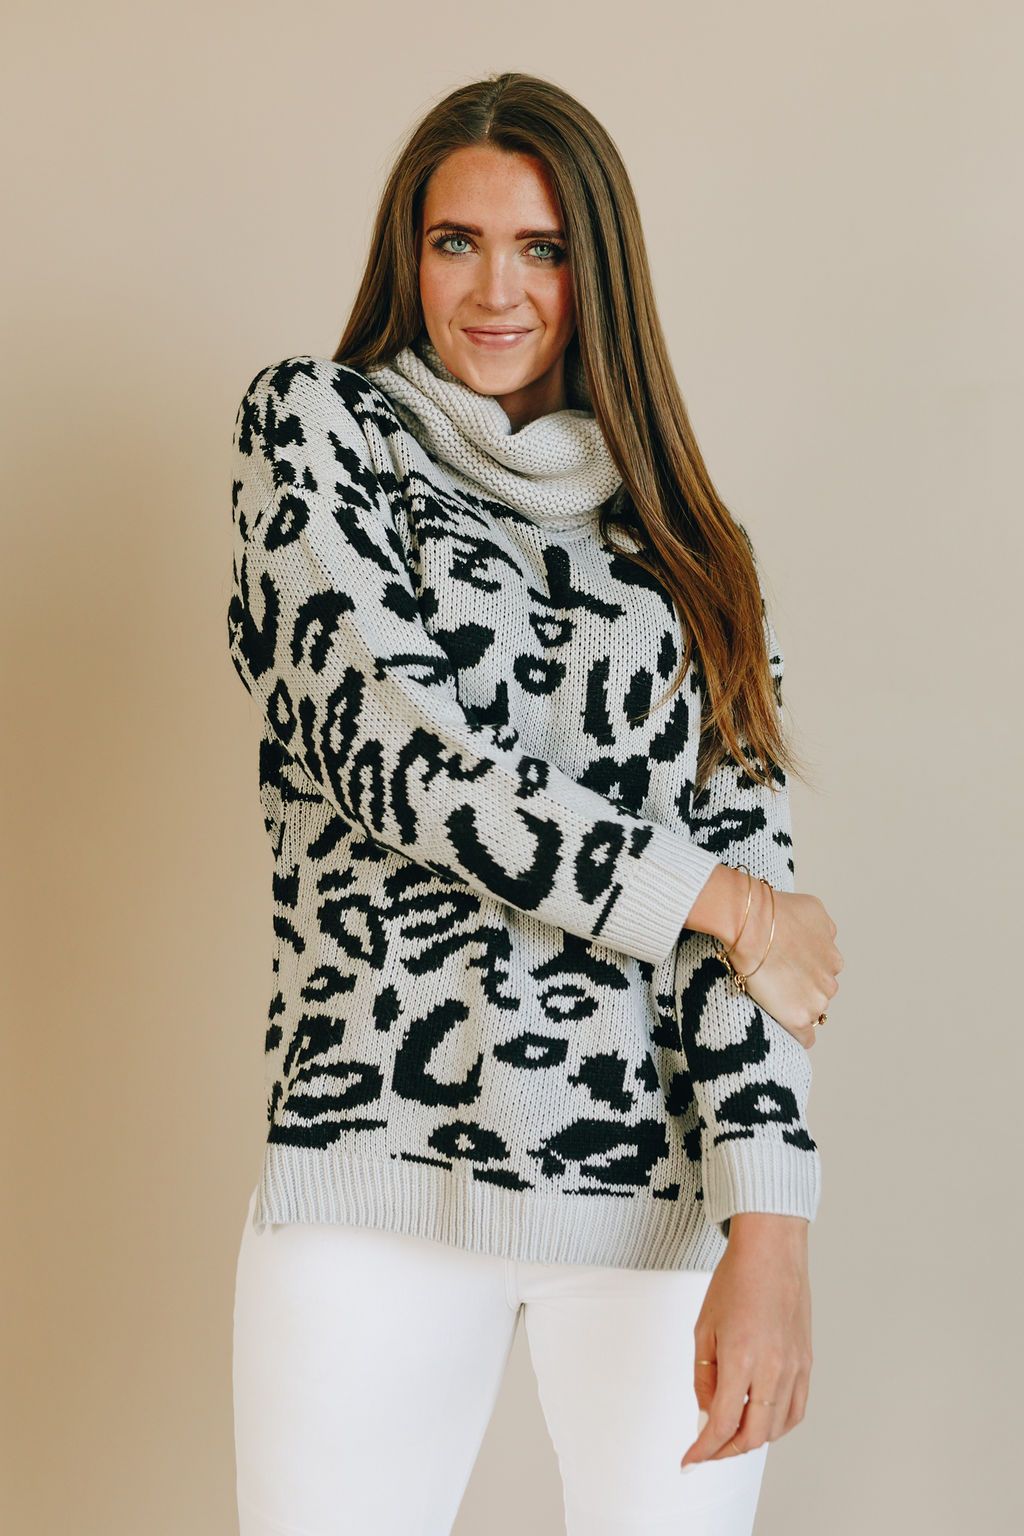 Cozy Cat Leopard Sweater